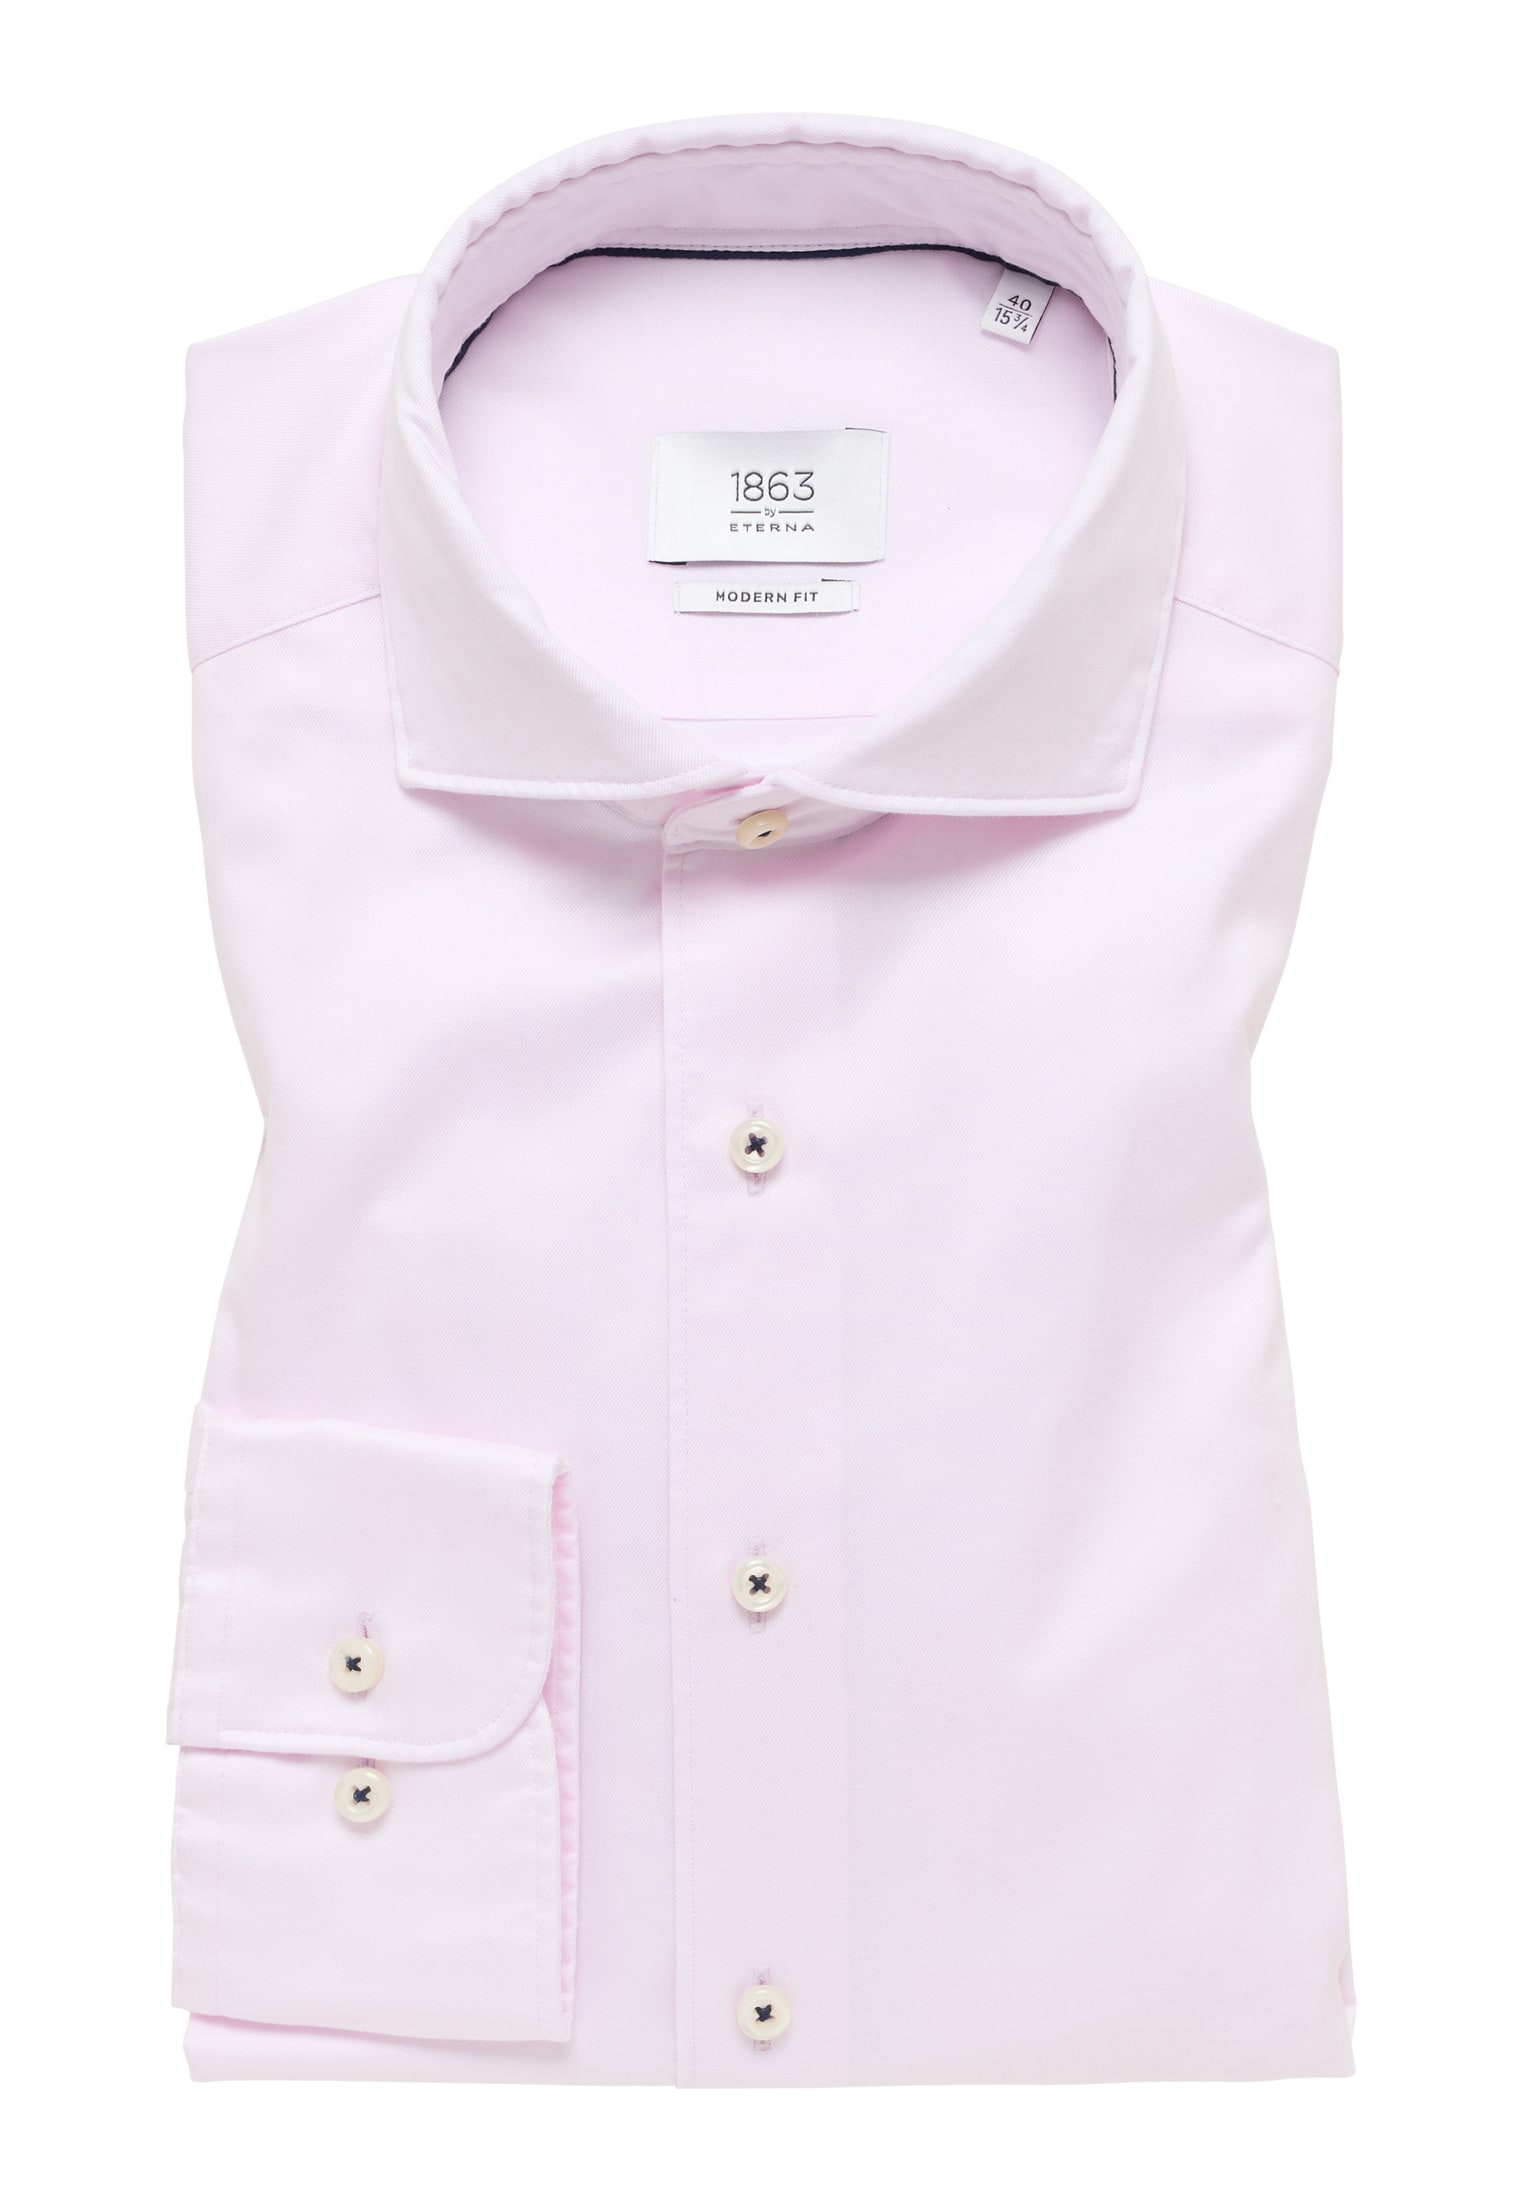 soft Soft MODERN pink sleeve | 42 Luxury long 1SH03488-15-12-42-1/1 | in pink Shirt | FIT soft plain |